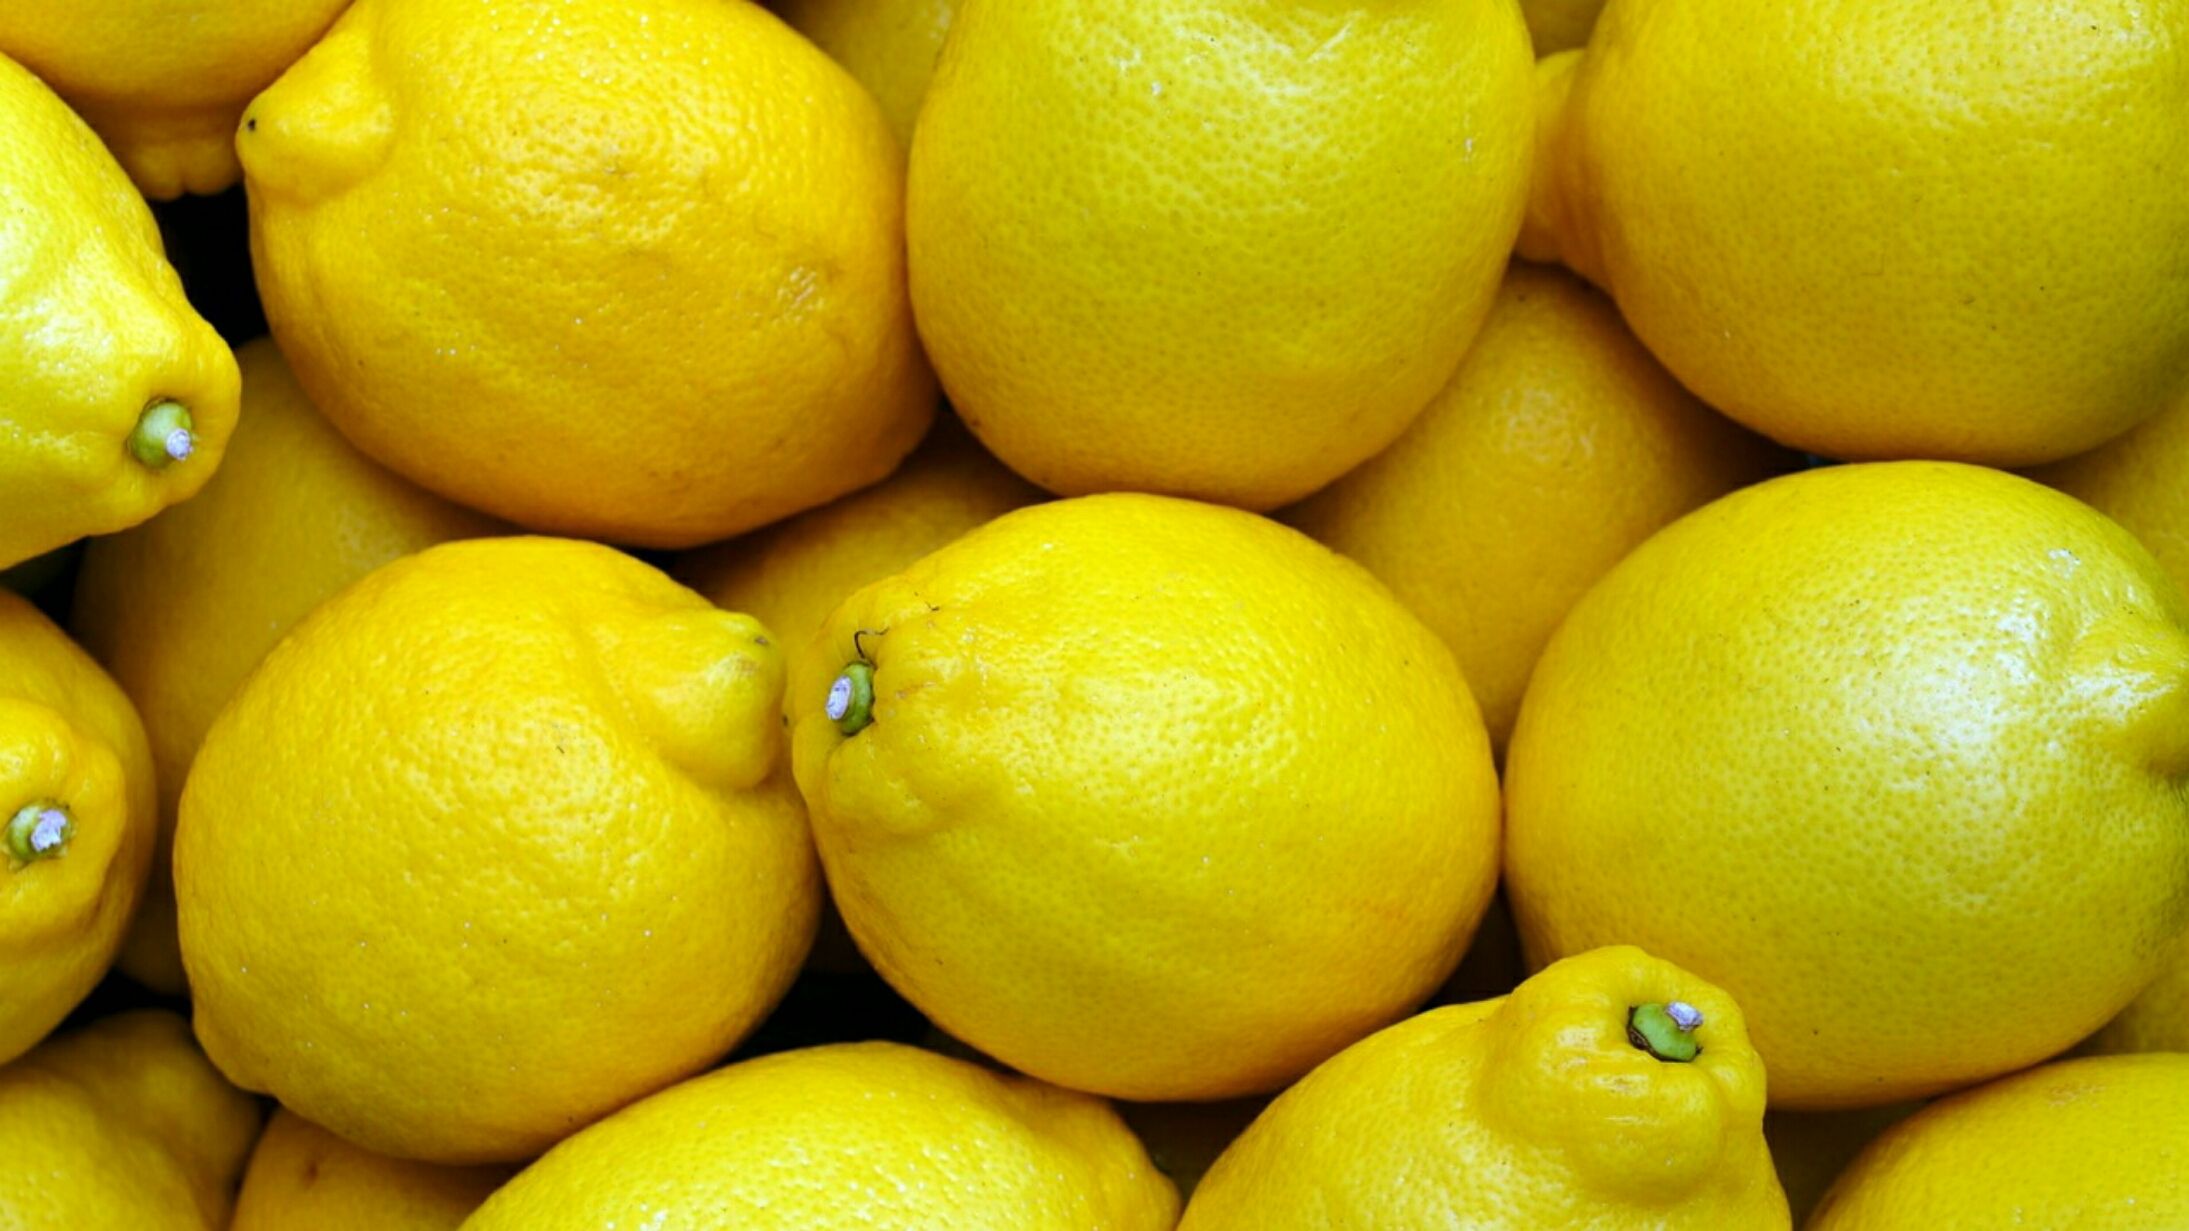 Buah lemon yang segar dangan rasa asam/